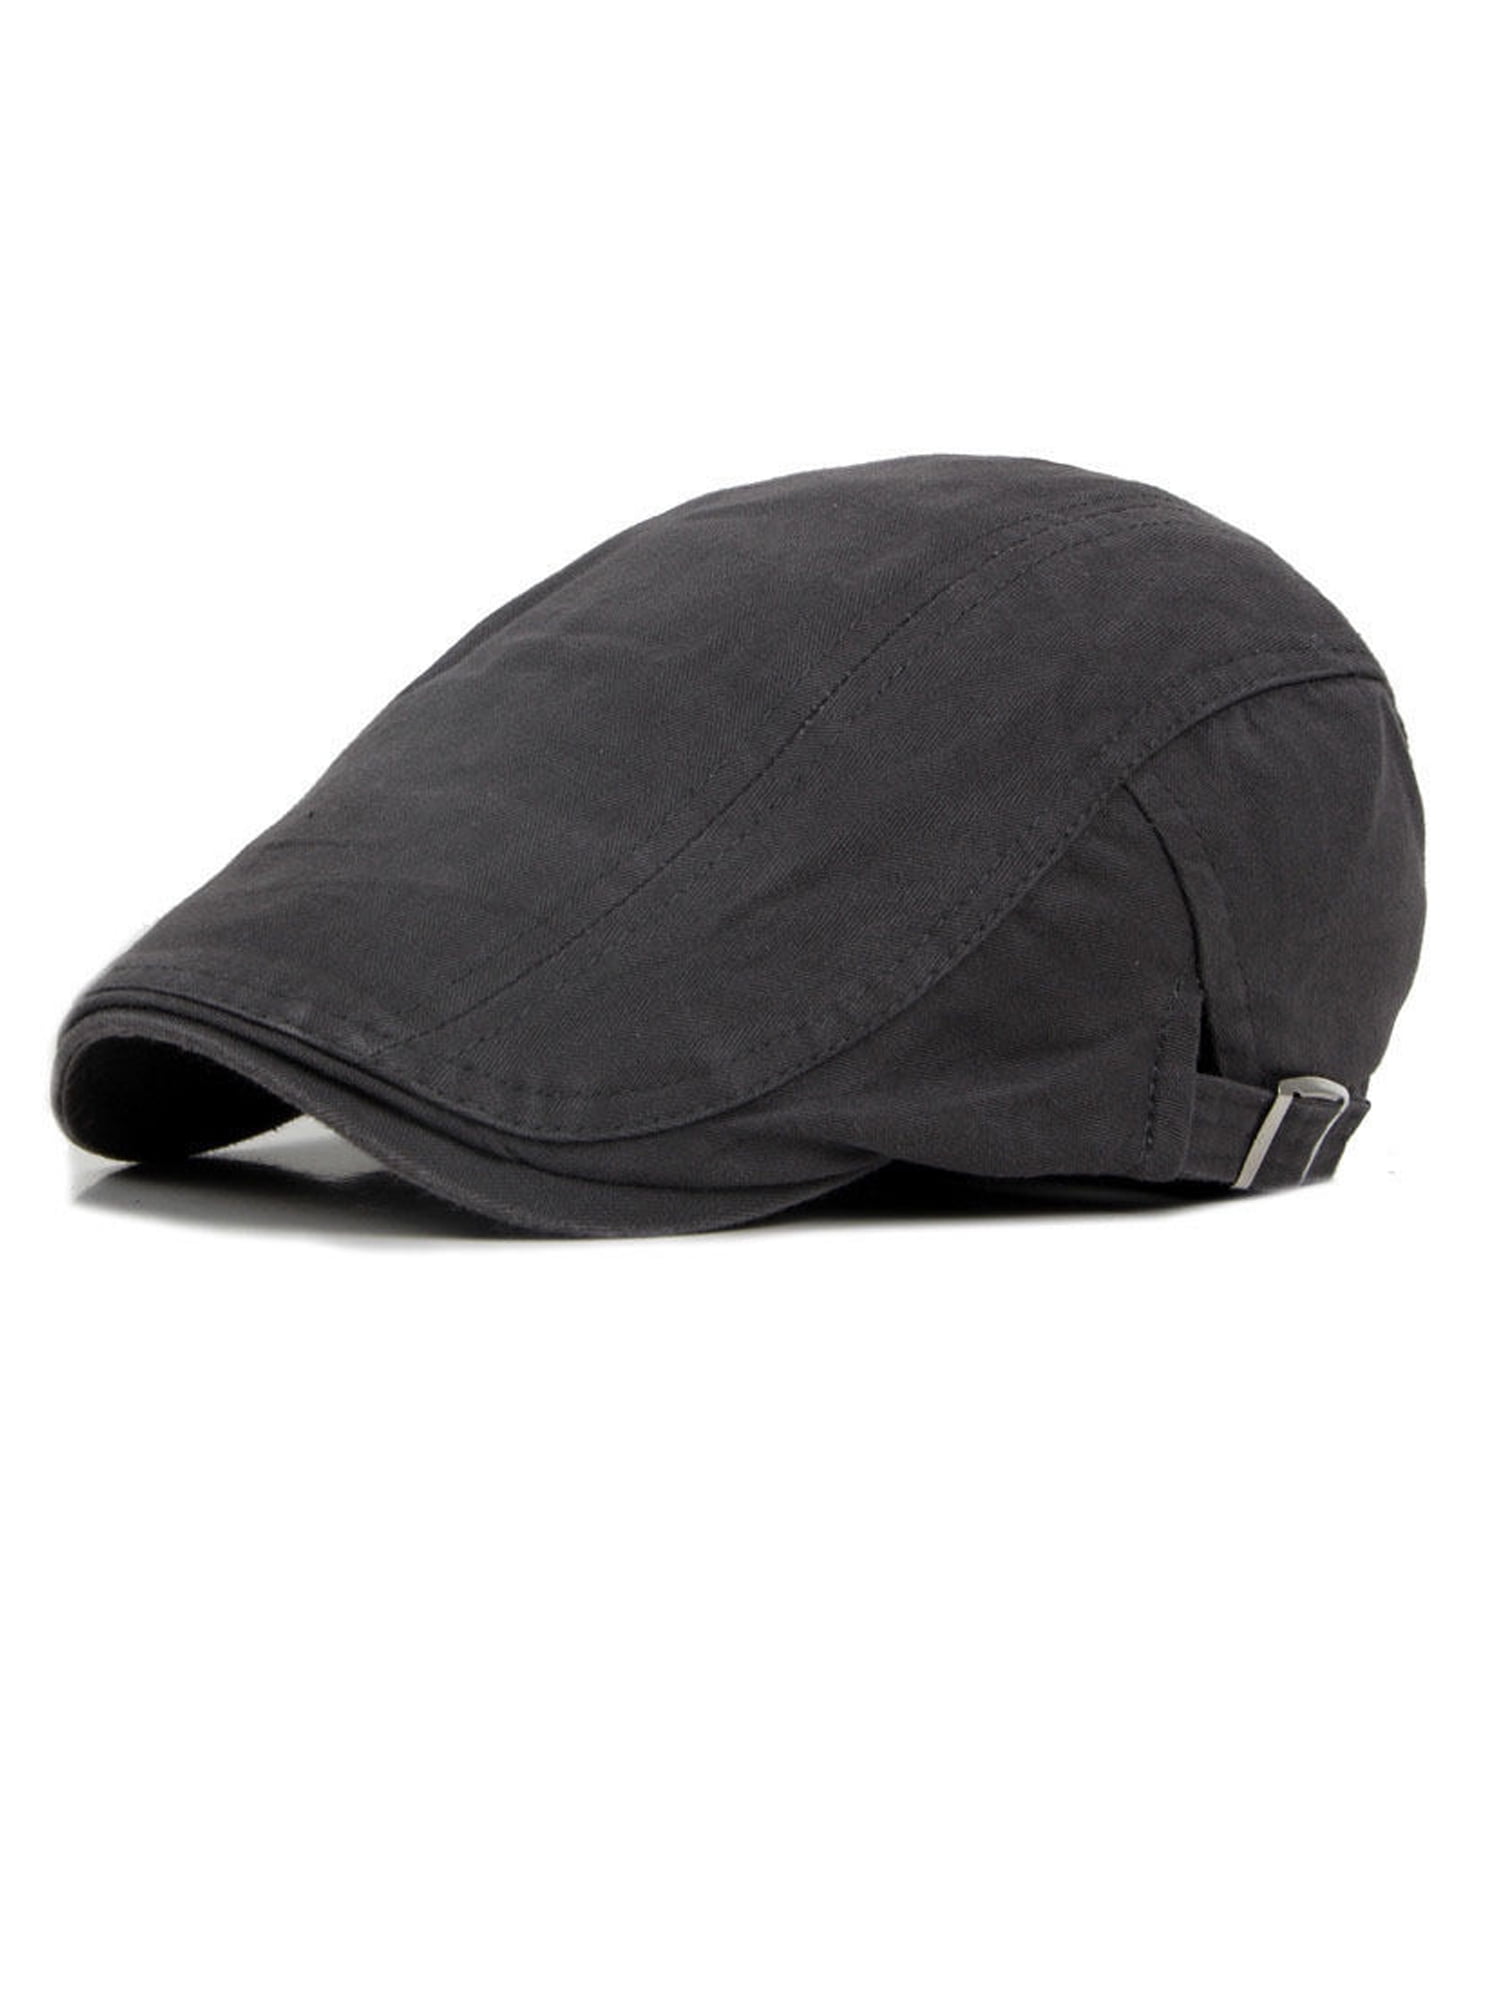 Morning Snapback Cotton Caps Flat Hats Casual Professional Cap